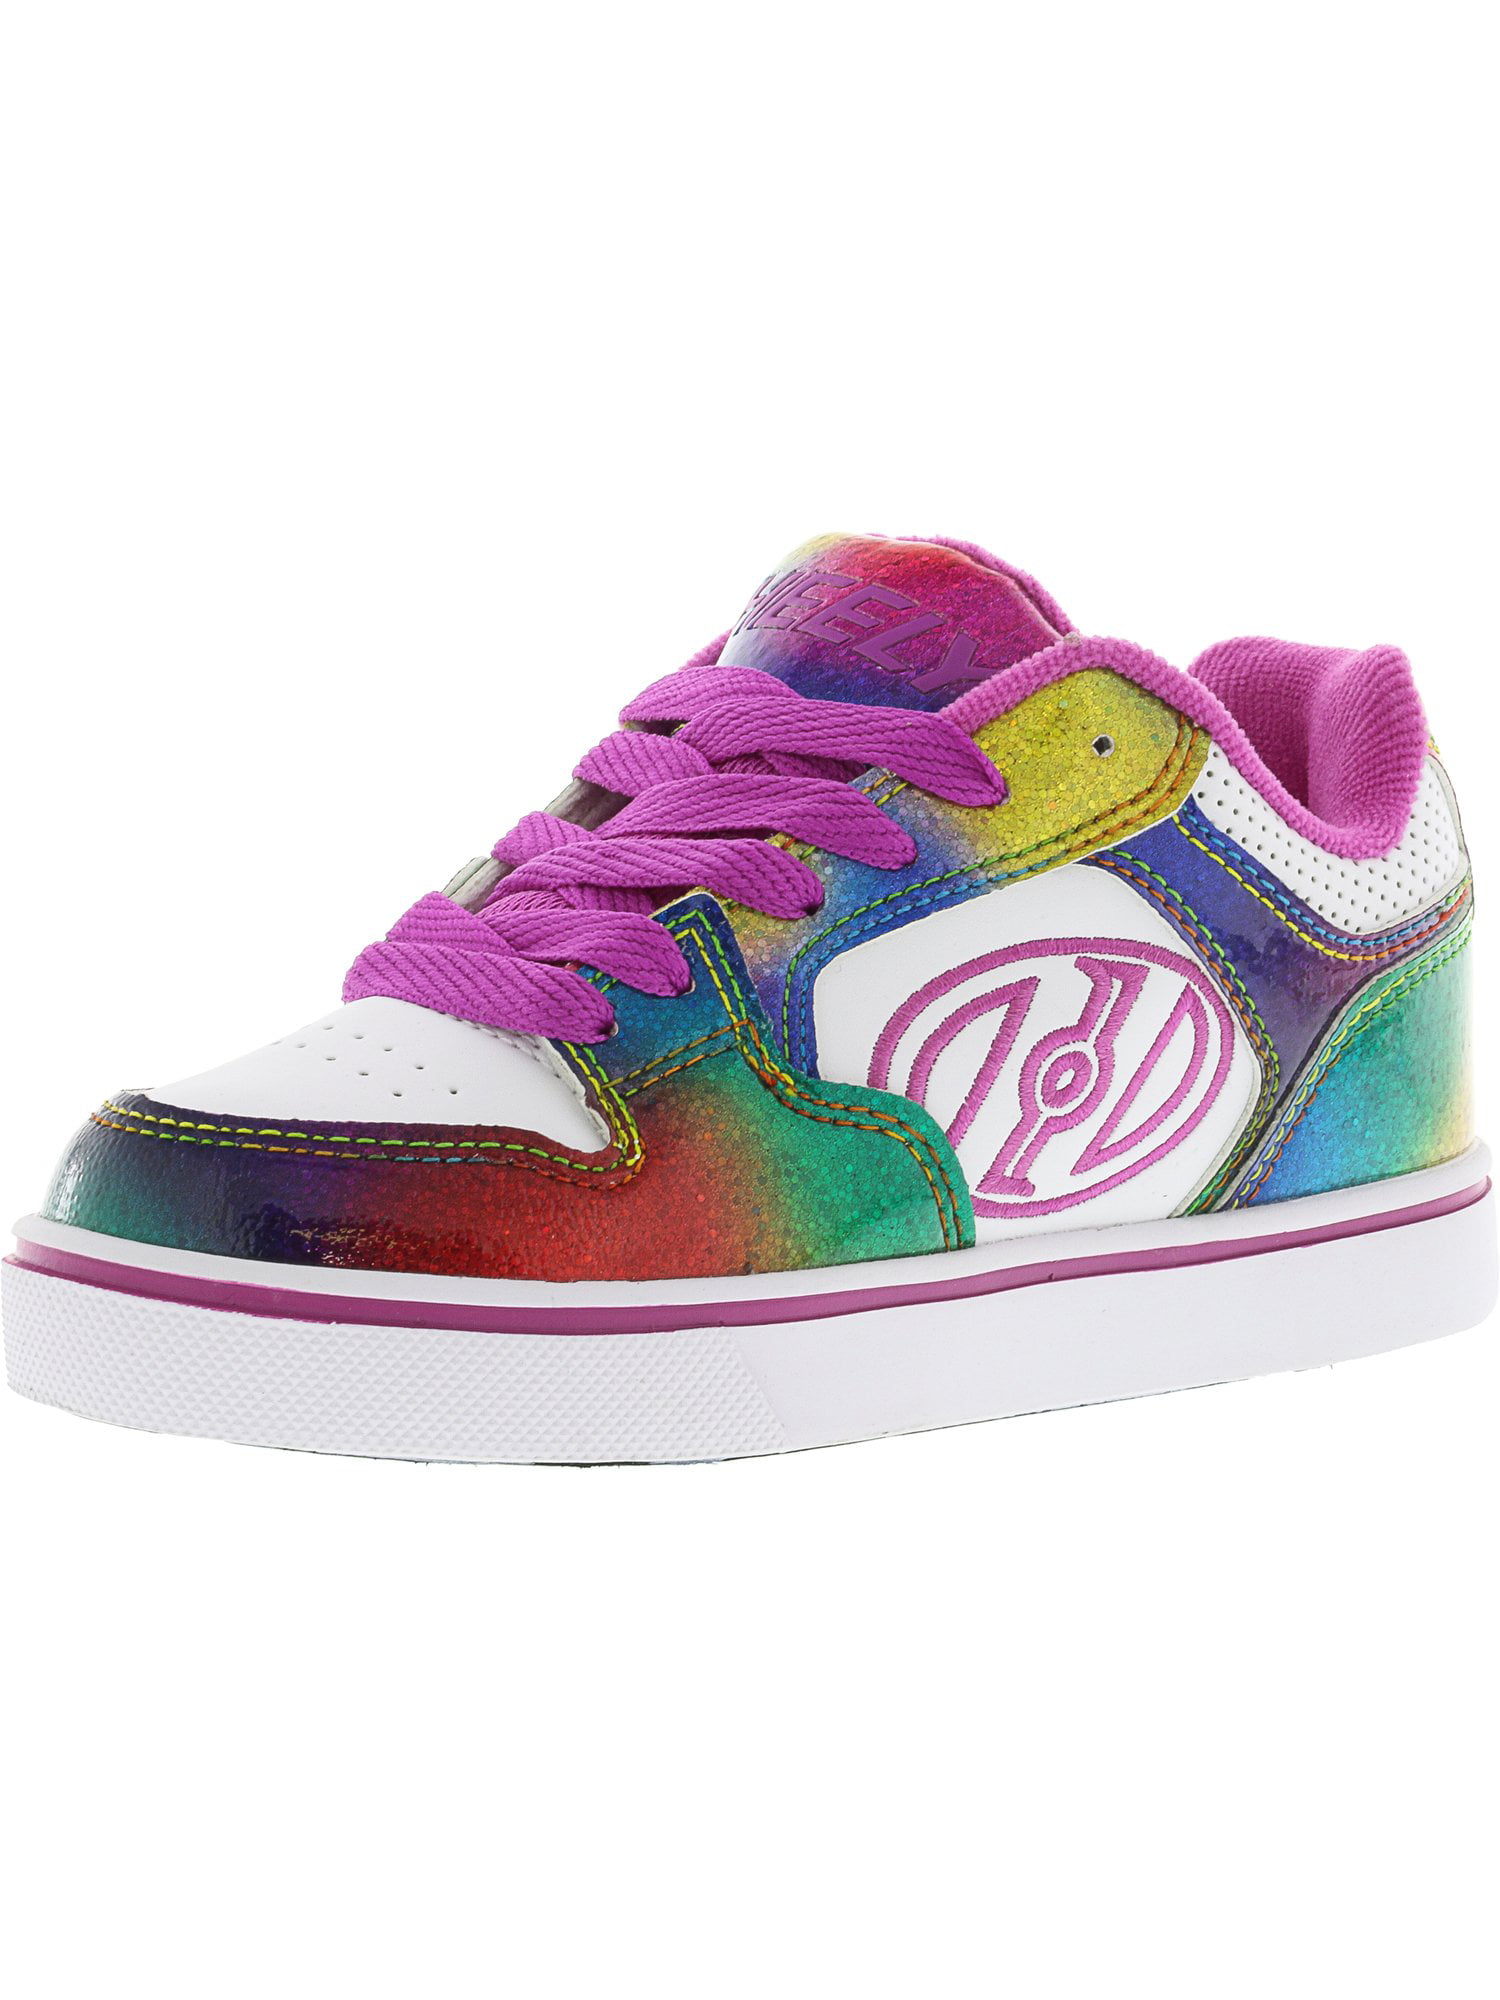 Heelys Plus / Rainbow Hot Pink Ankle-High Skateboarding Shoe - 2M Walmart.com